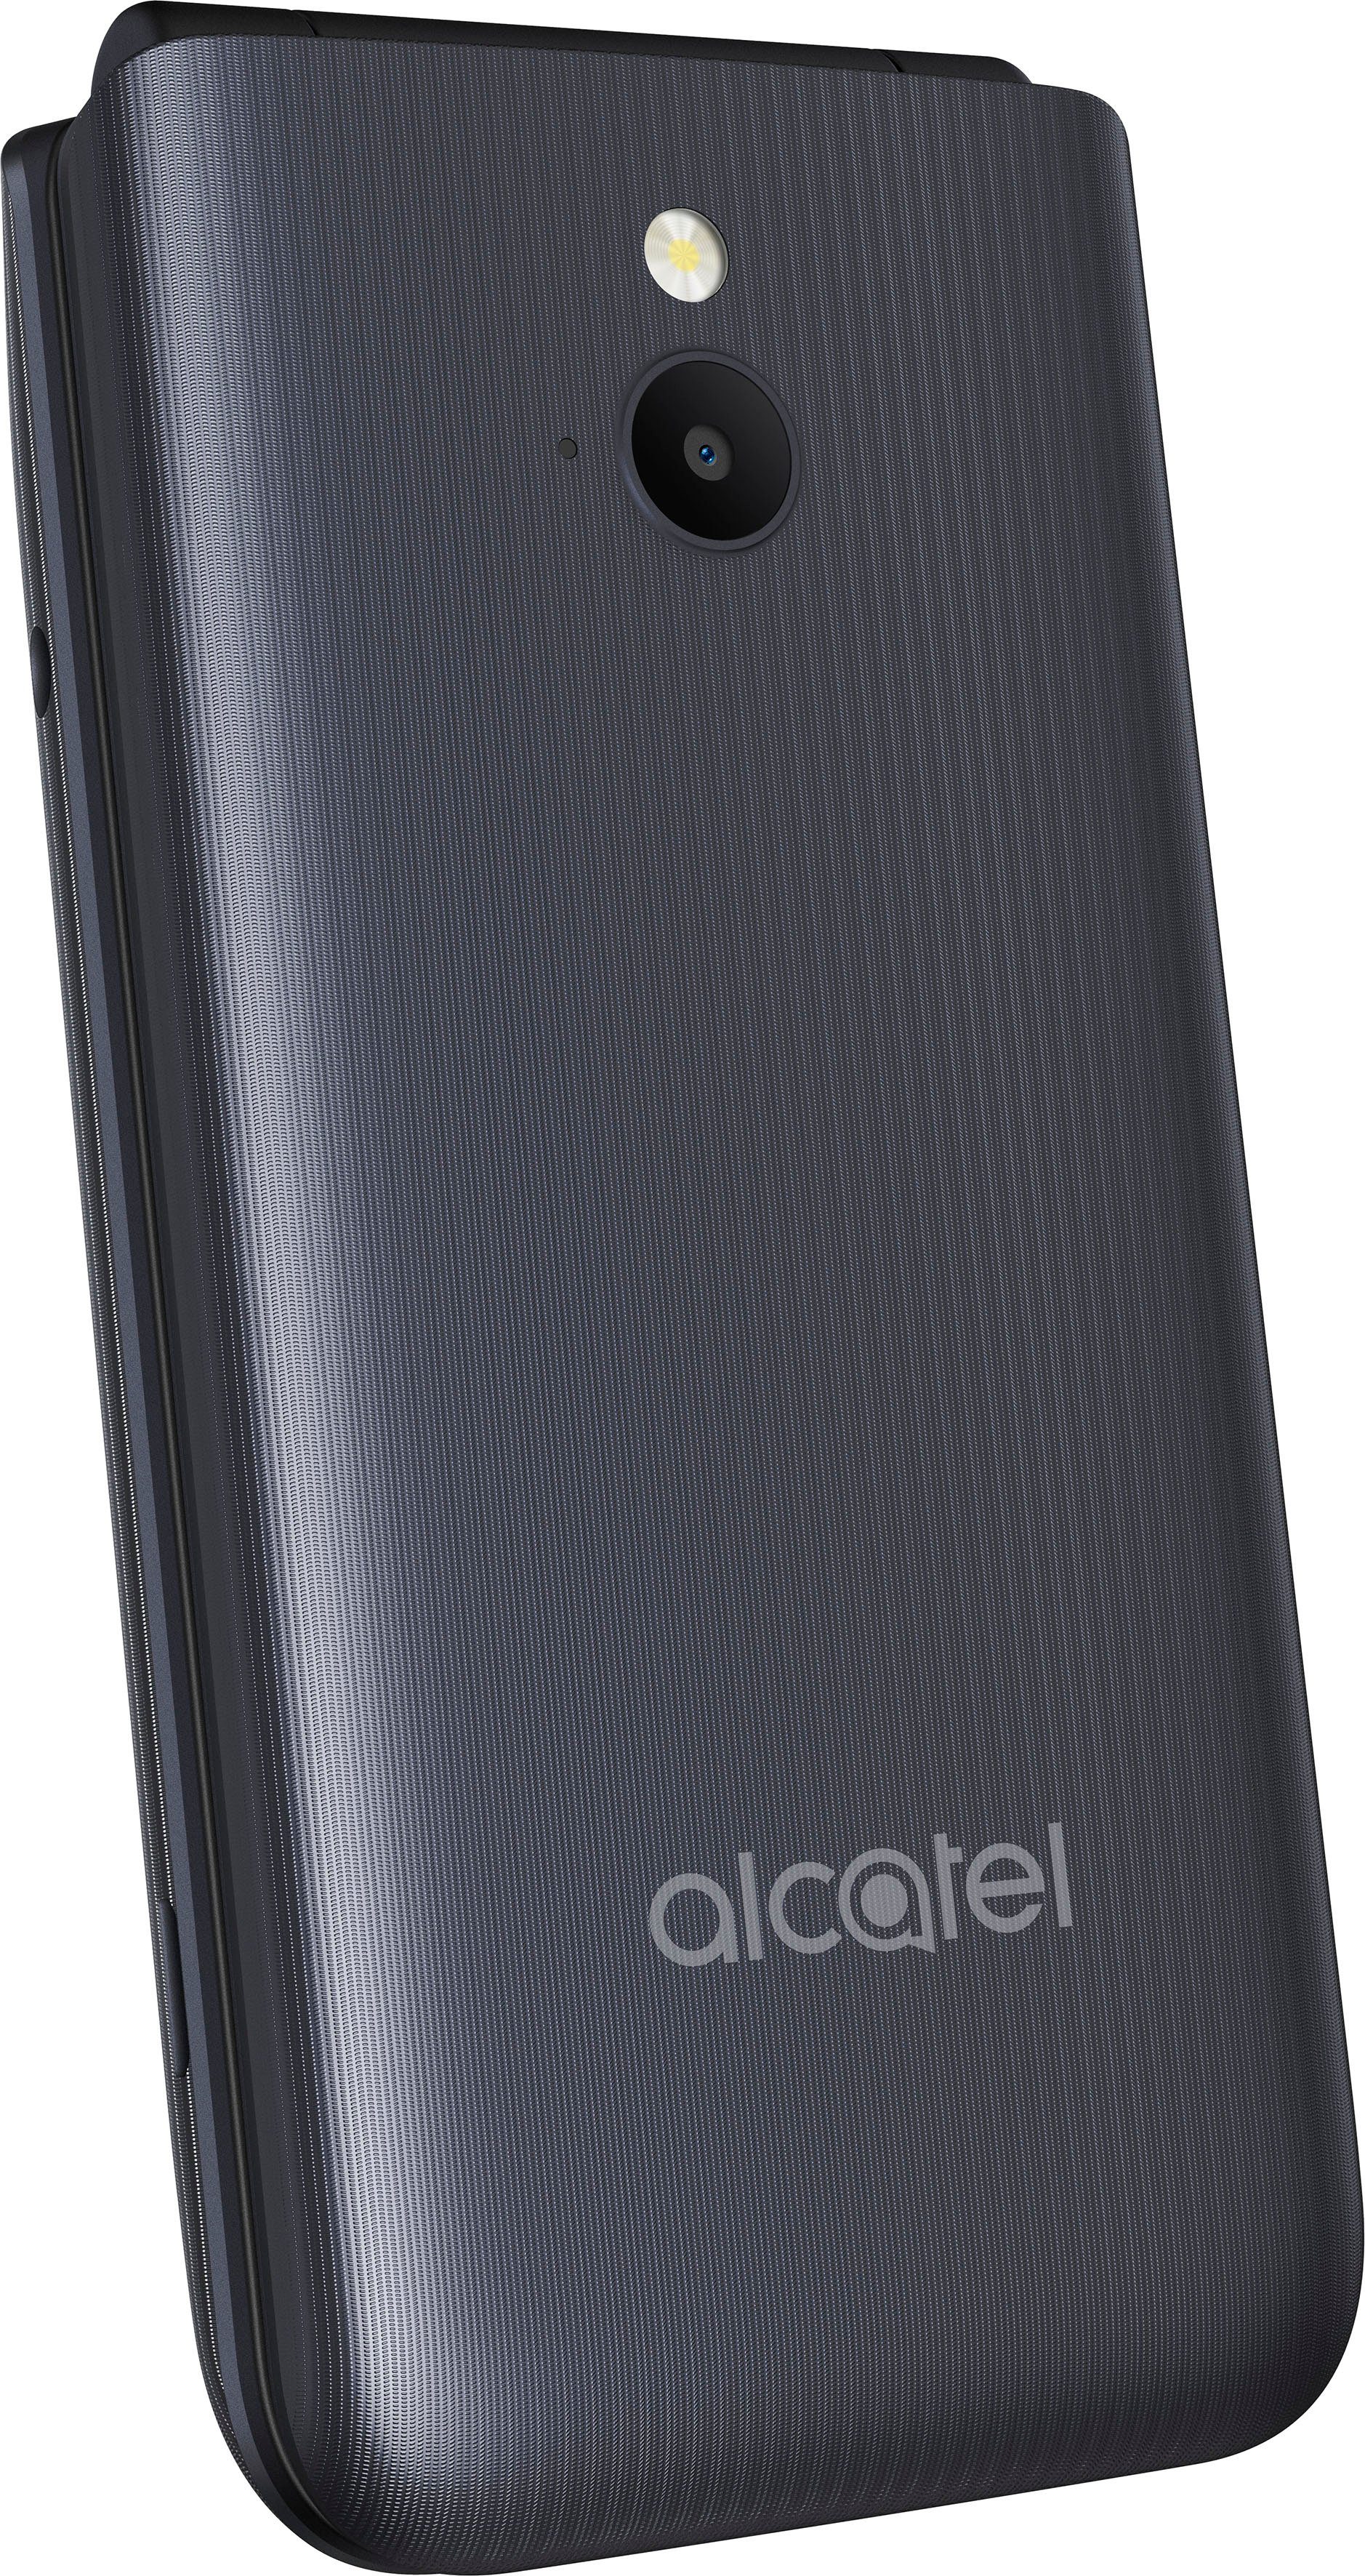 Alcatel 3082 Handy (6,1 0,13 GB Zoll, MP Speicherplatz, Kamera) cm/2,4 1,3